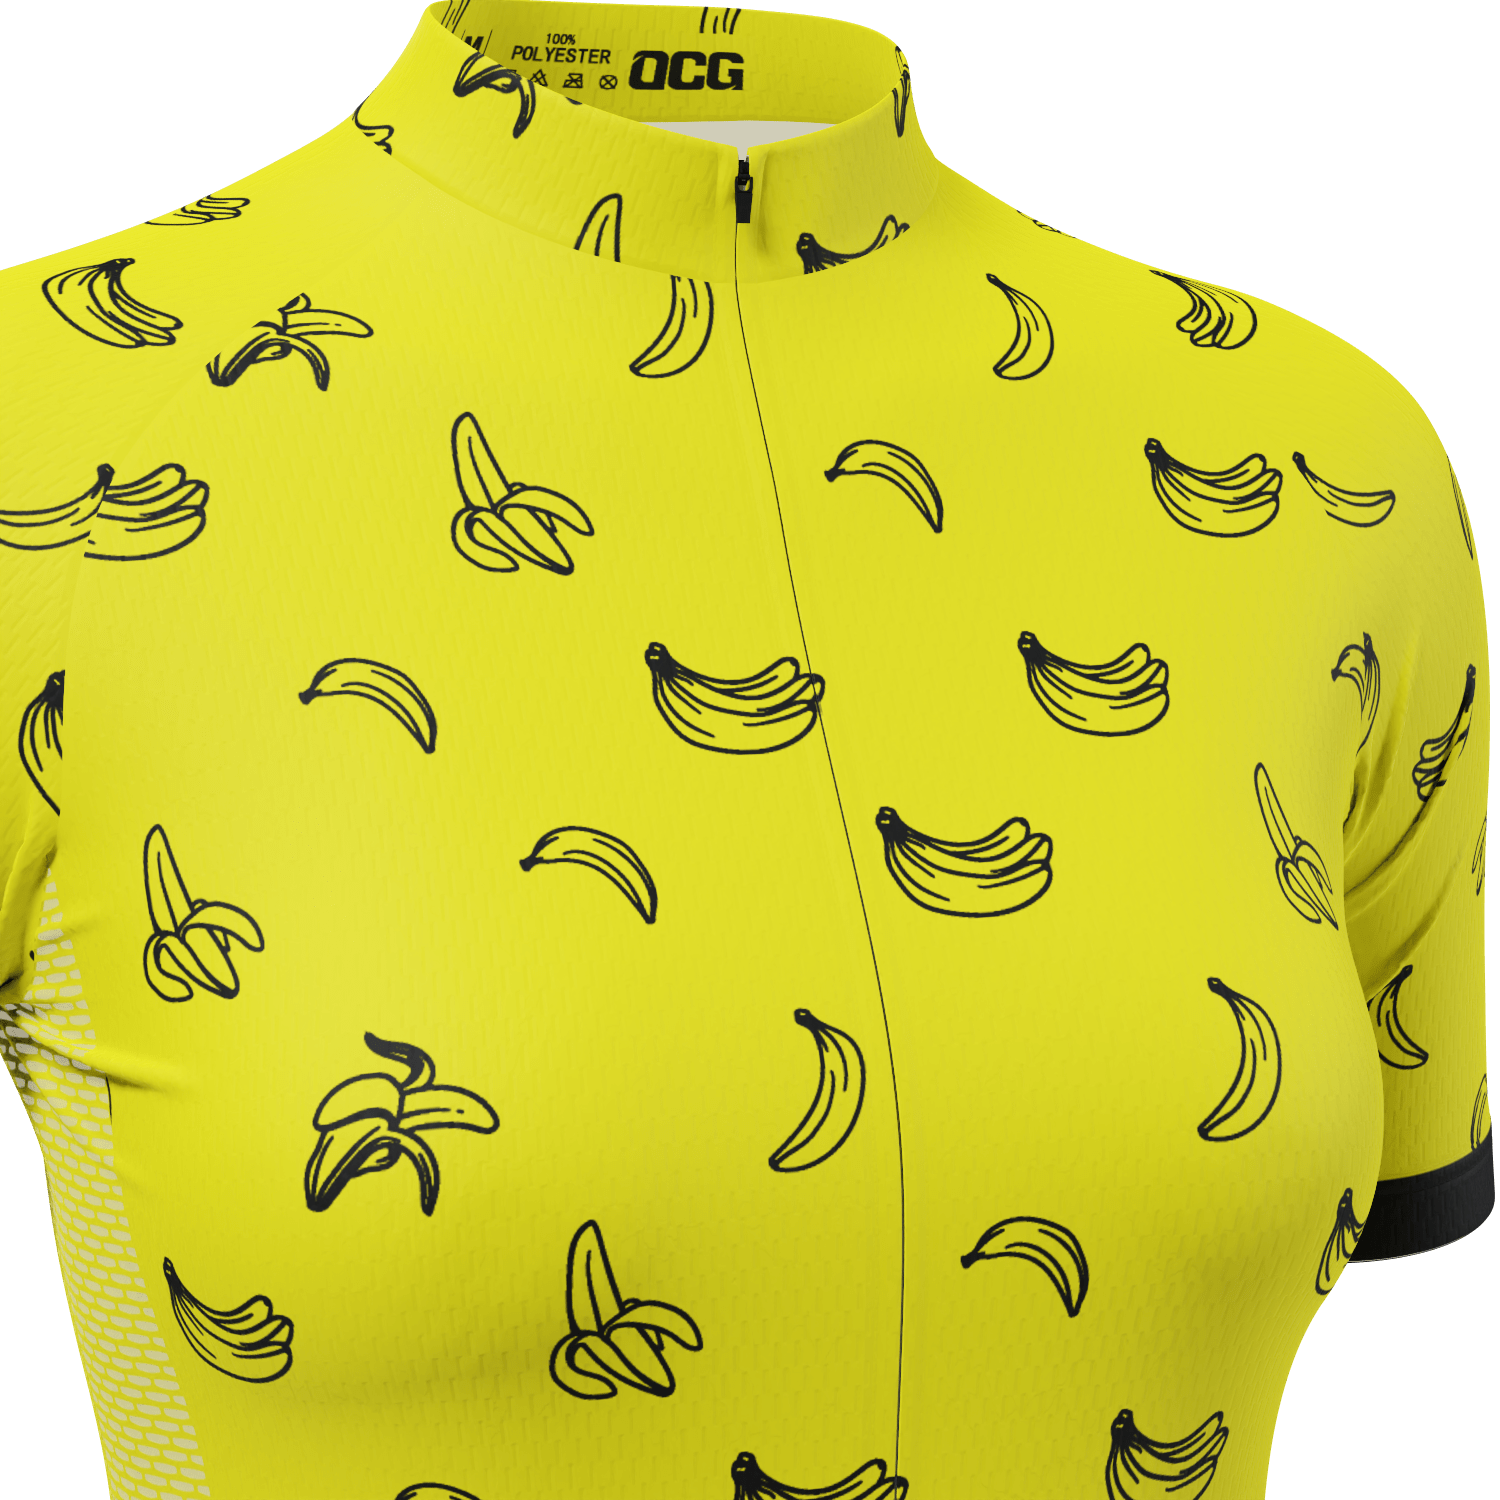 Women's Must Be Bananas Cycling Jersey